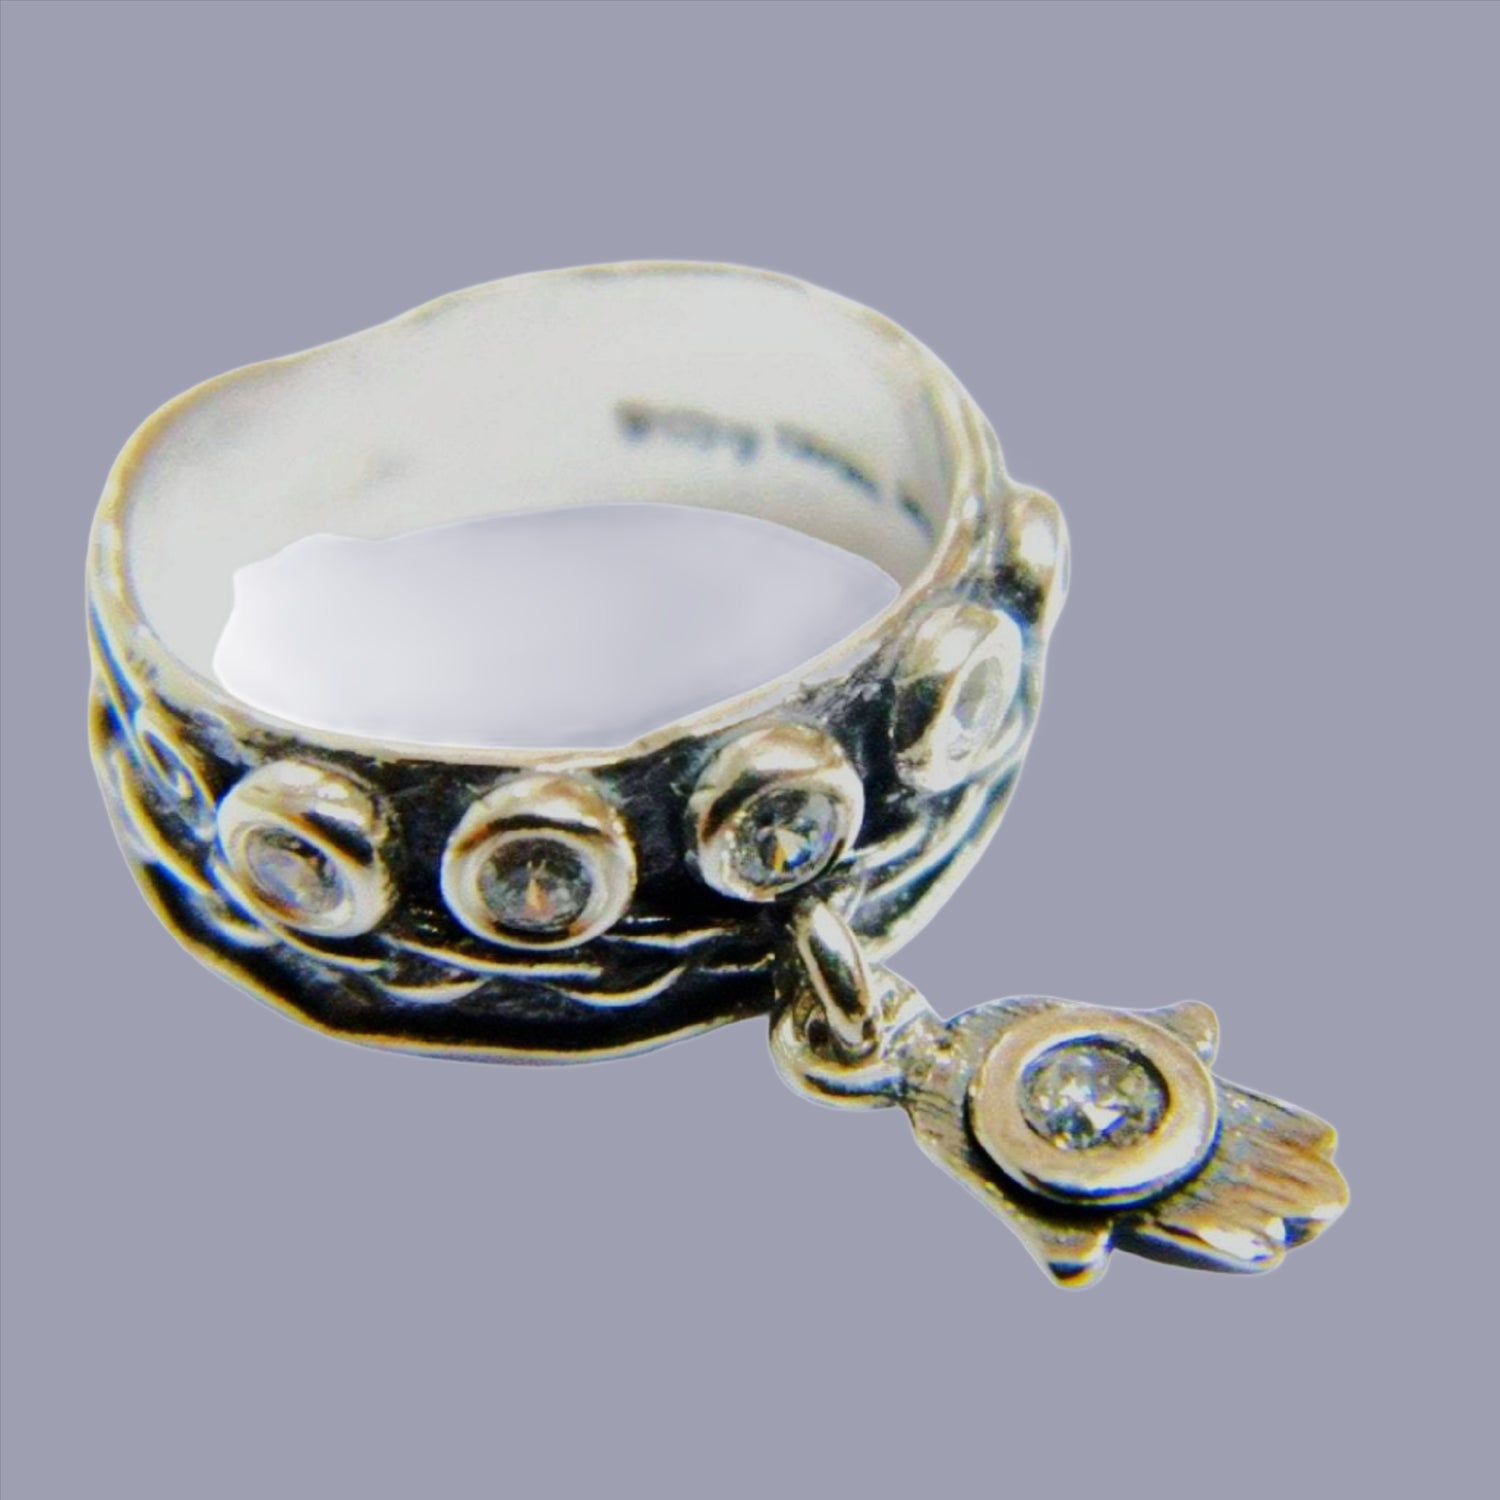 Bluenoemi Jewelry Rings Bluenoemi sterling silver rings, seet Hamsa charm good luck Jewelry.